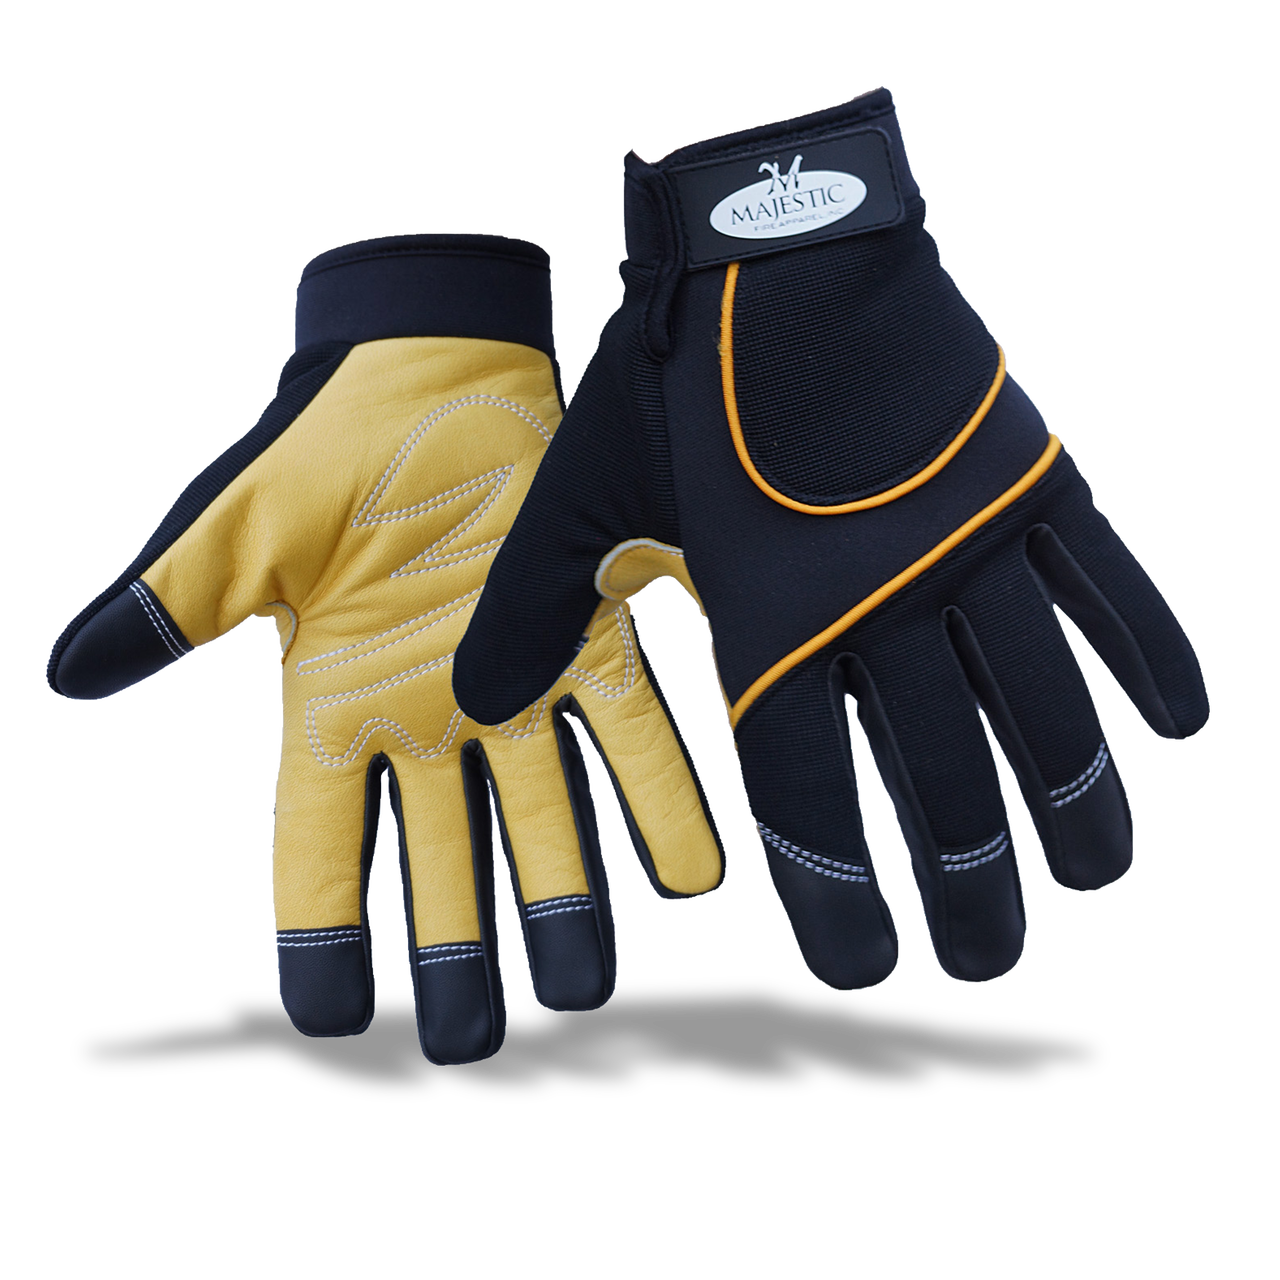 Majestic Leather Palm Mechanics Glove - Emergency Responder Products